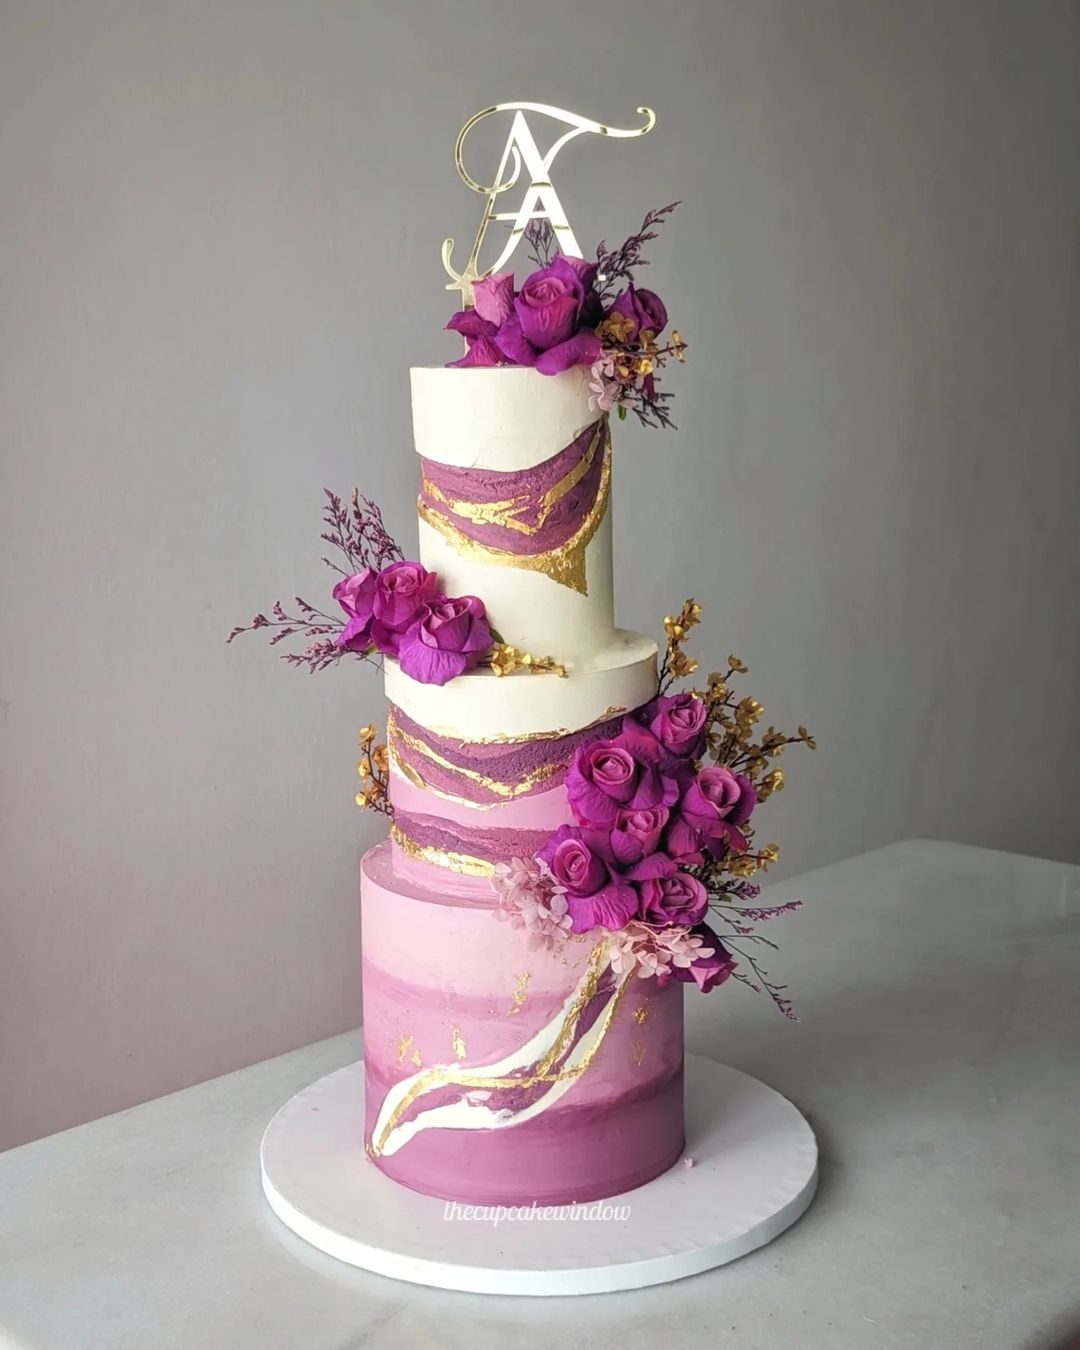 purple marble and gold 3 tier wedding cake via thecupcakewindow